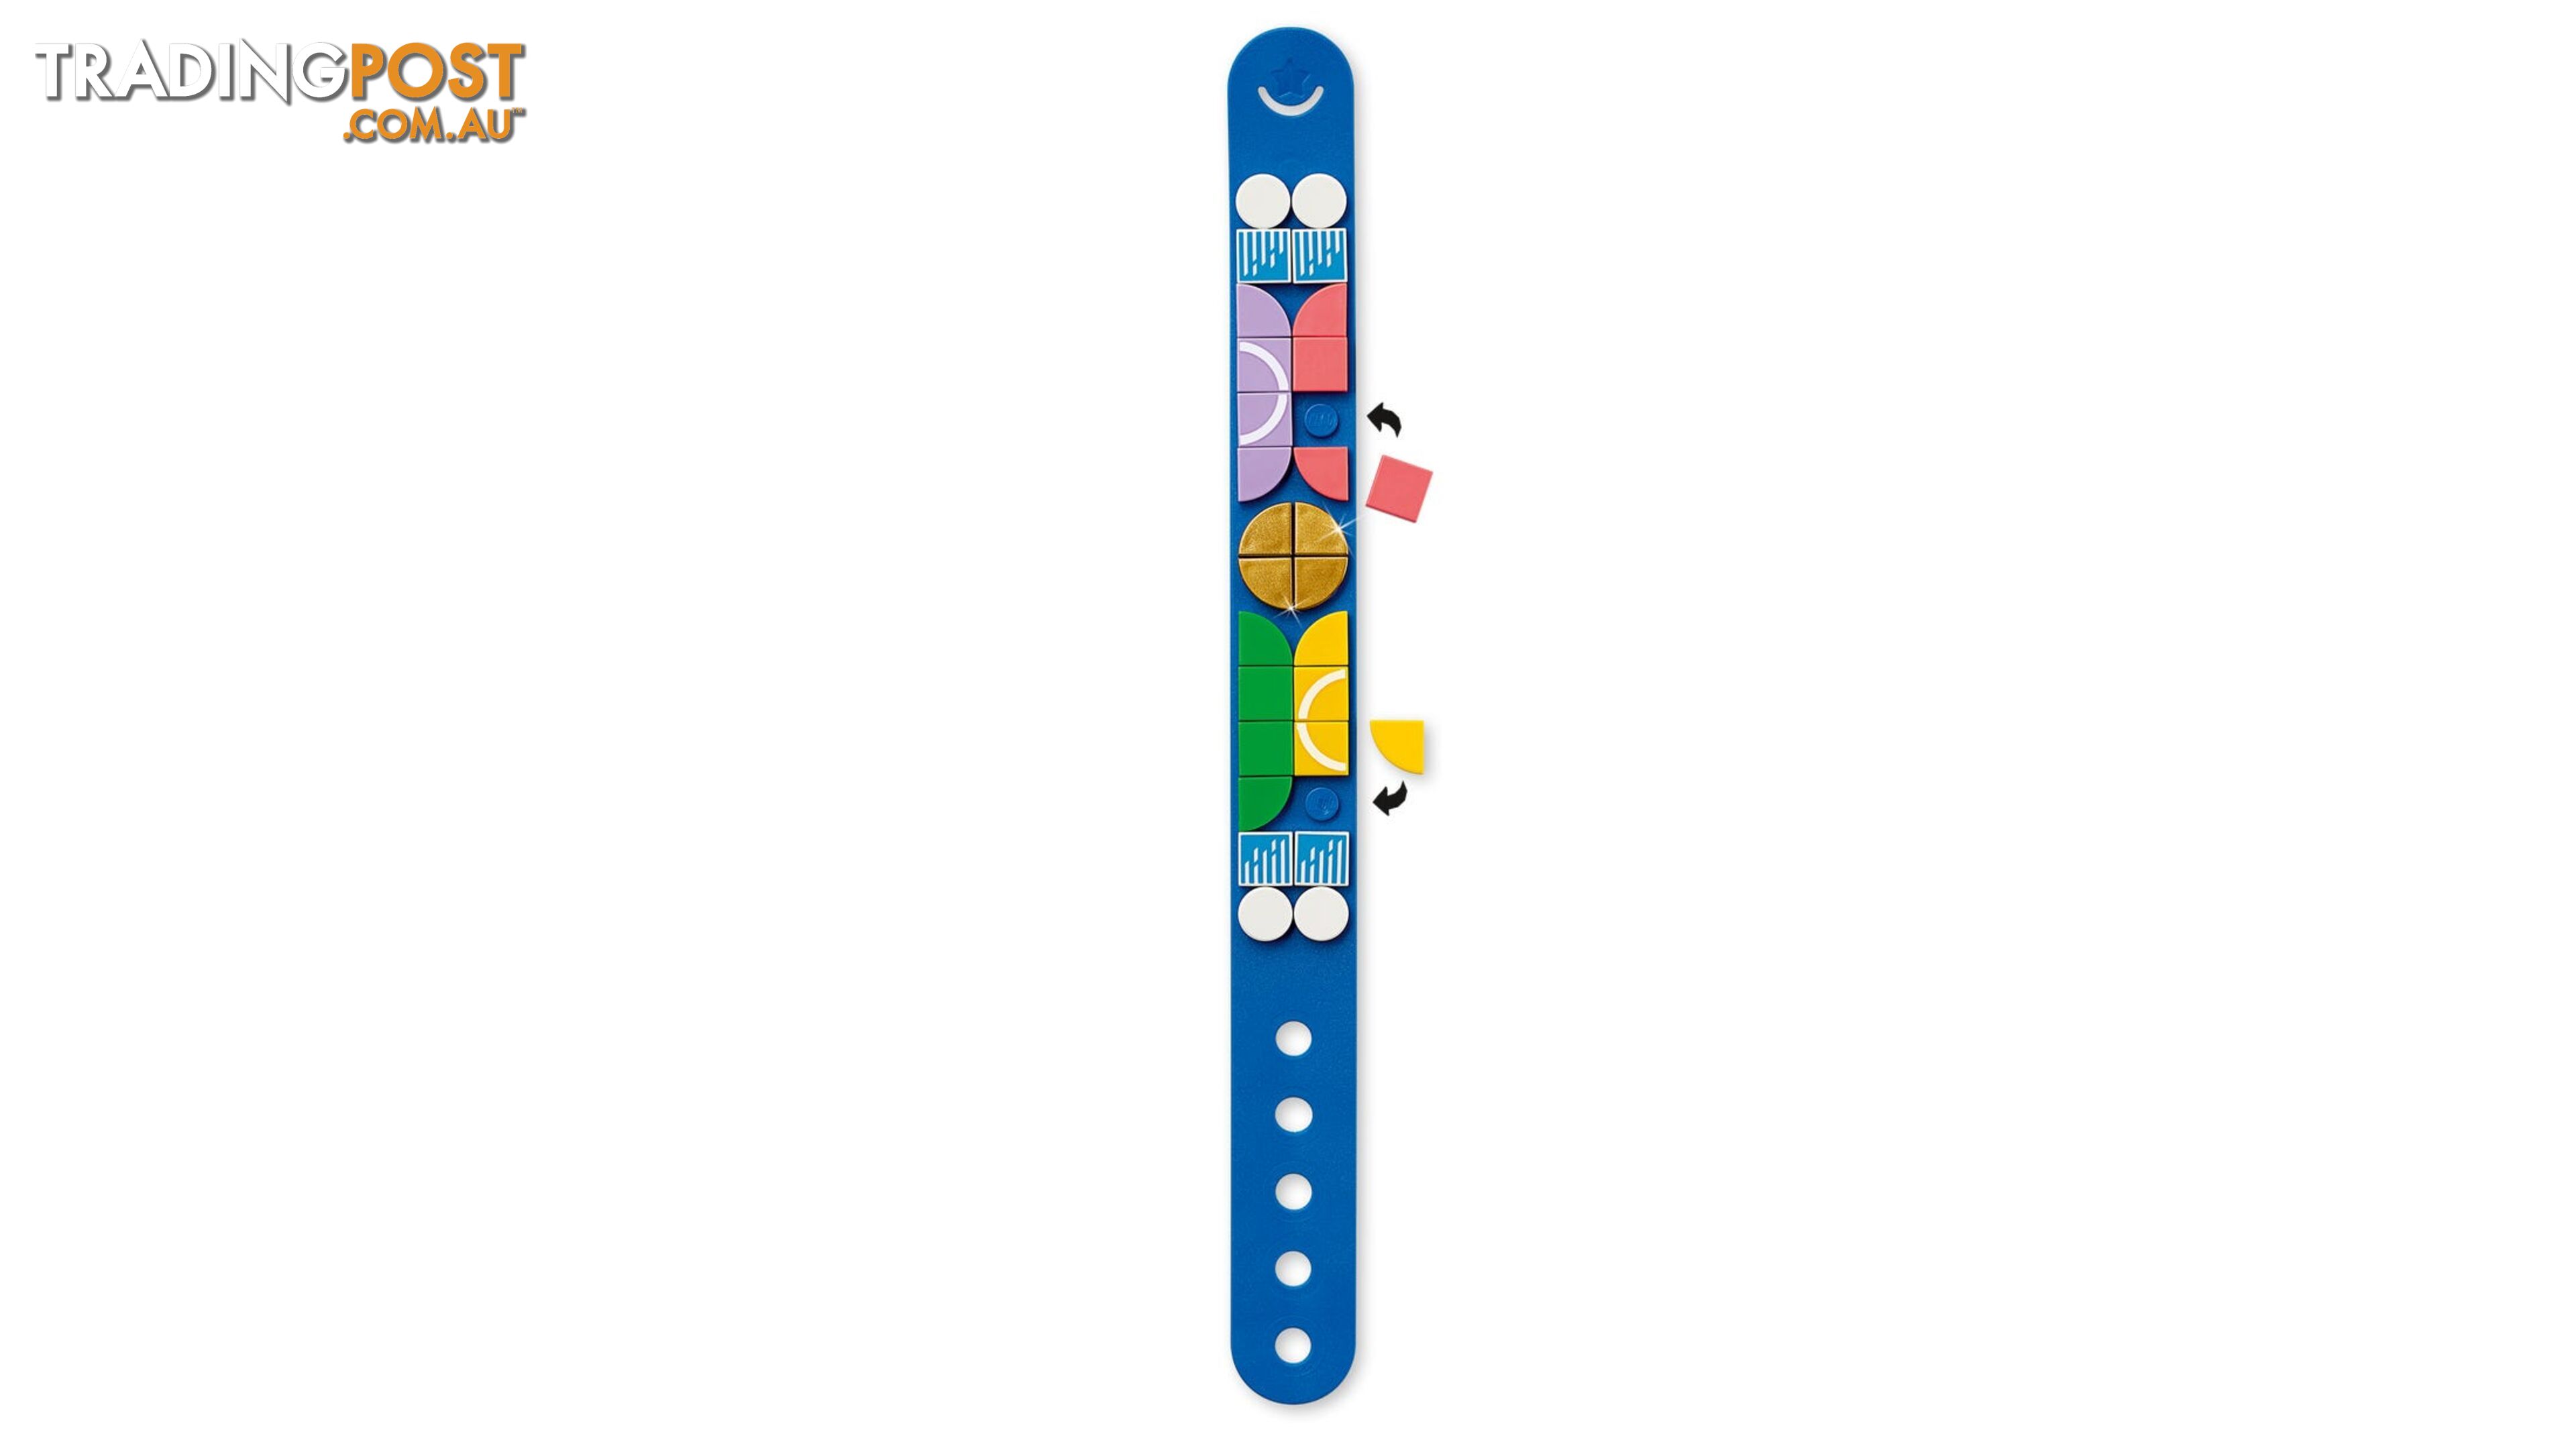 LEGO 41911 Go Team! Bracelet  - DOTS - 5702016668575